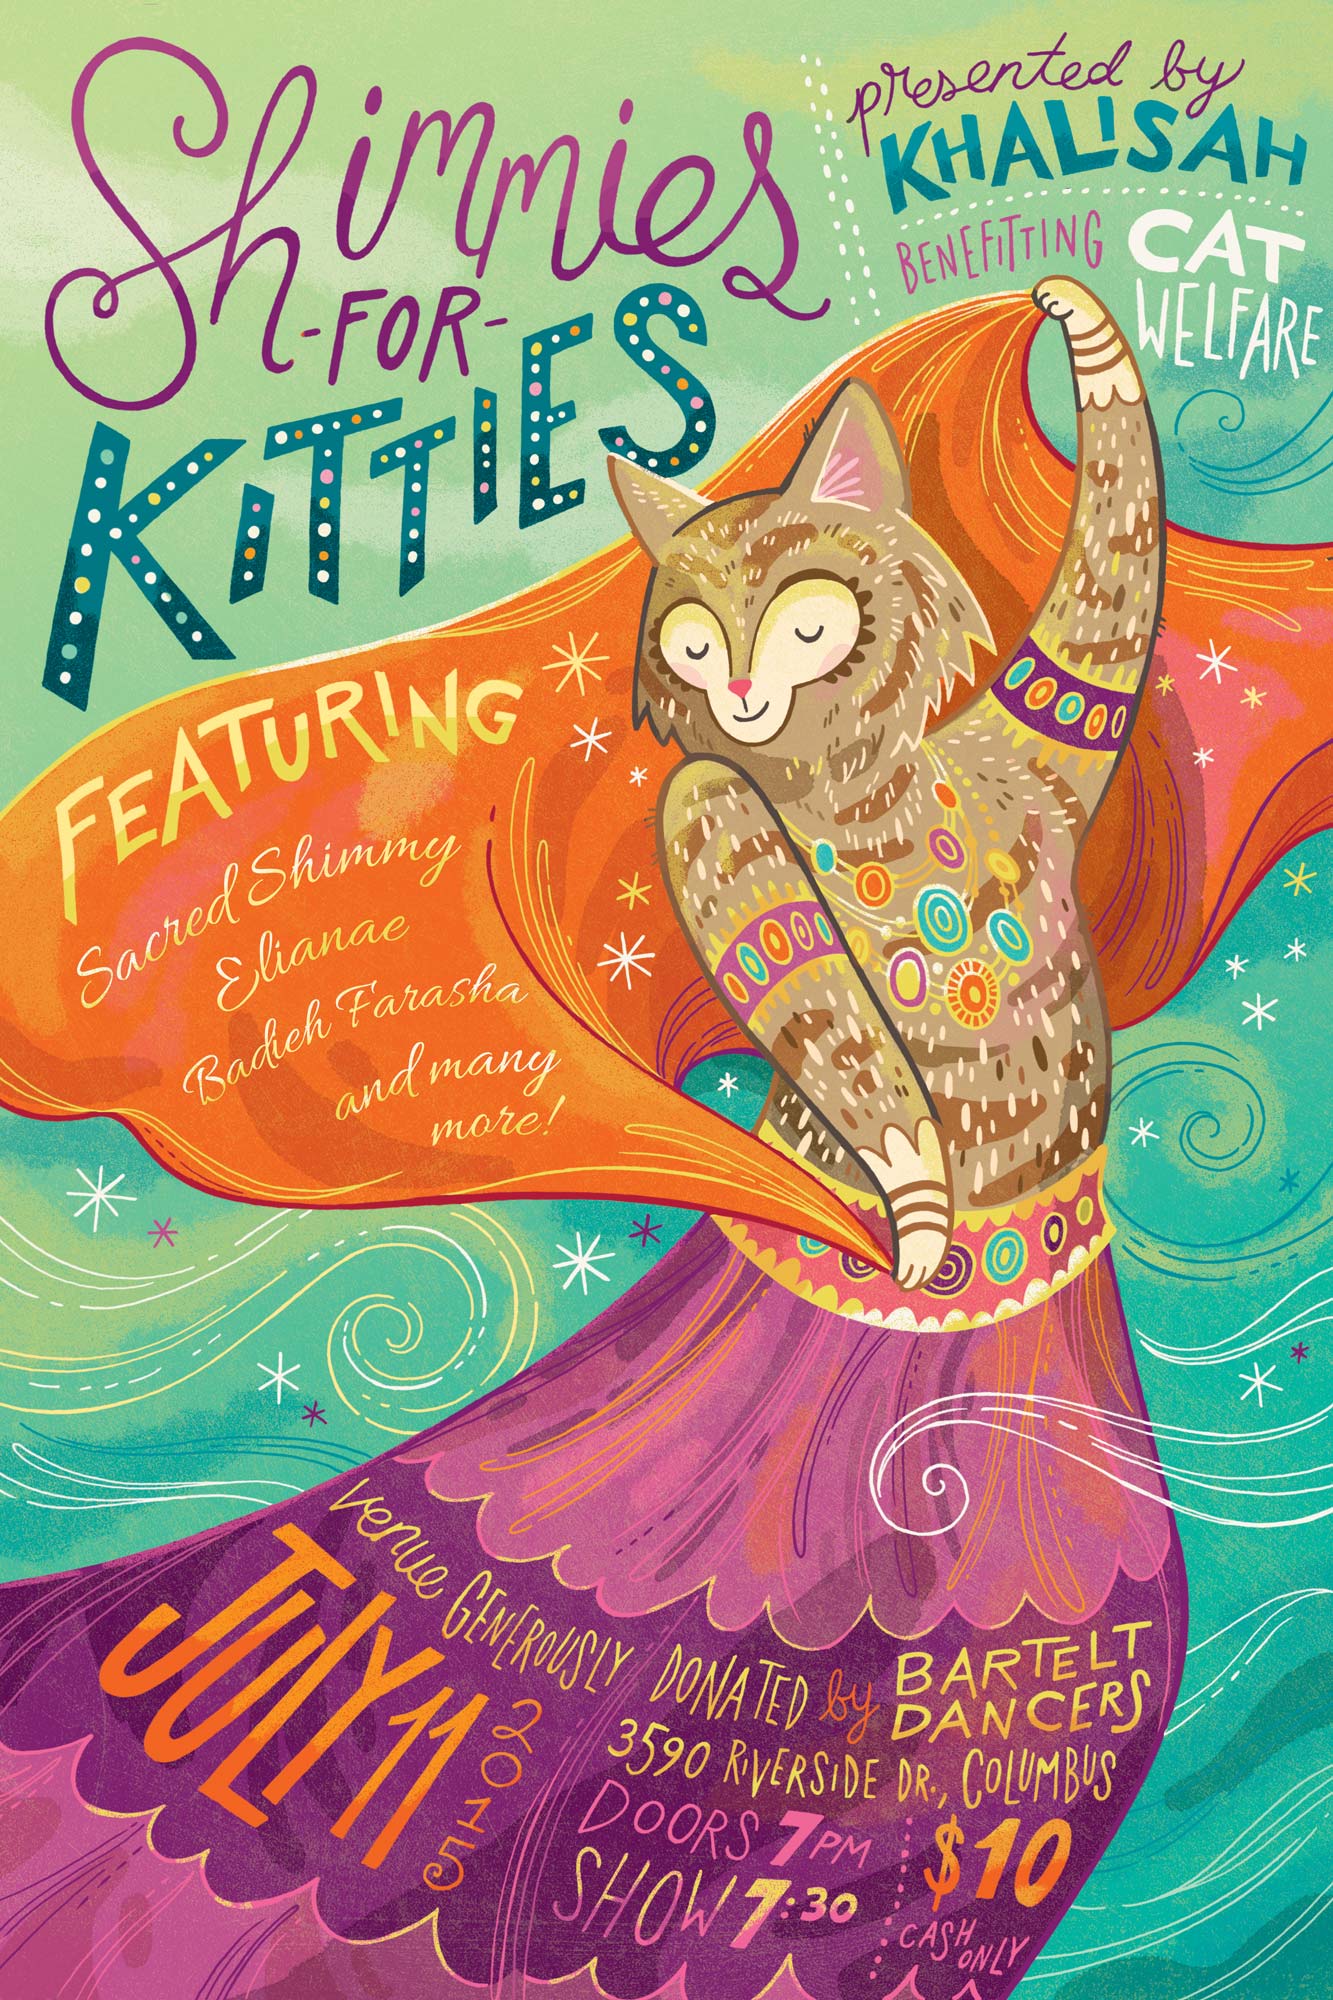 AnniBetts_Shimmies_for_Kitties1.jpg